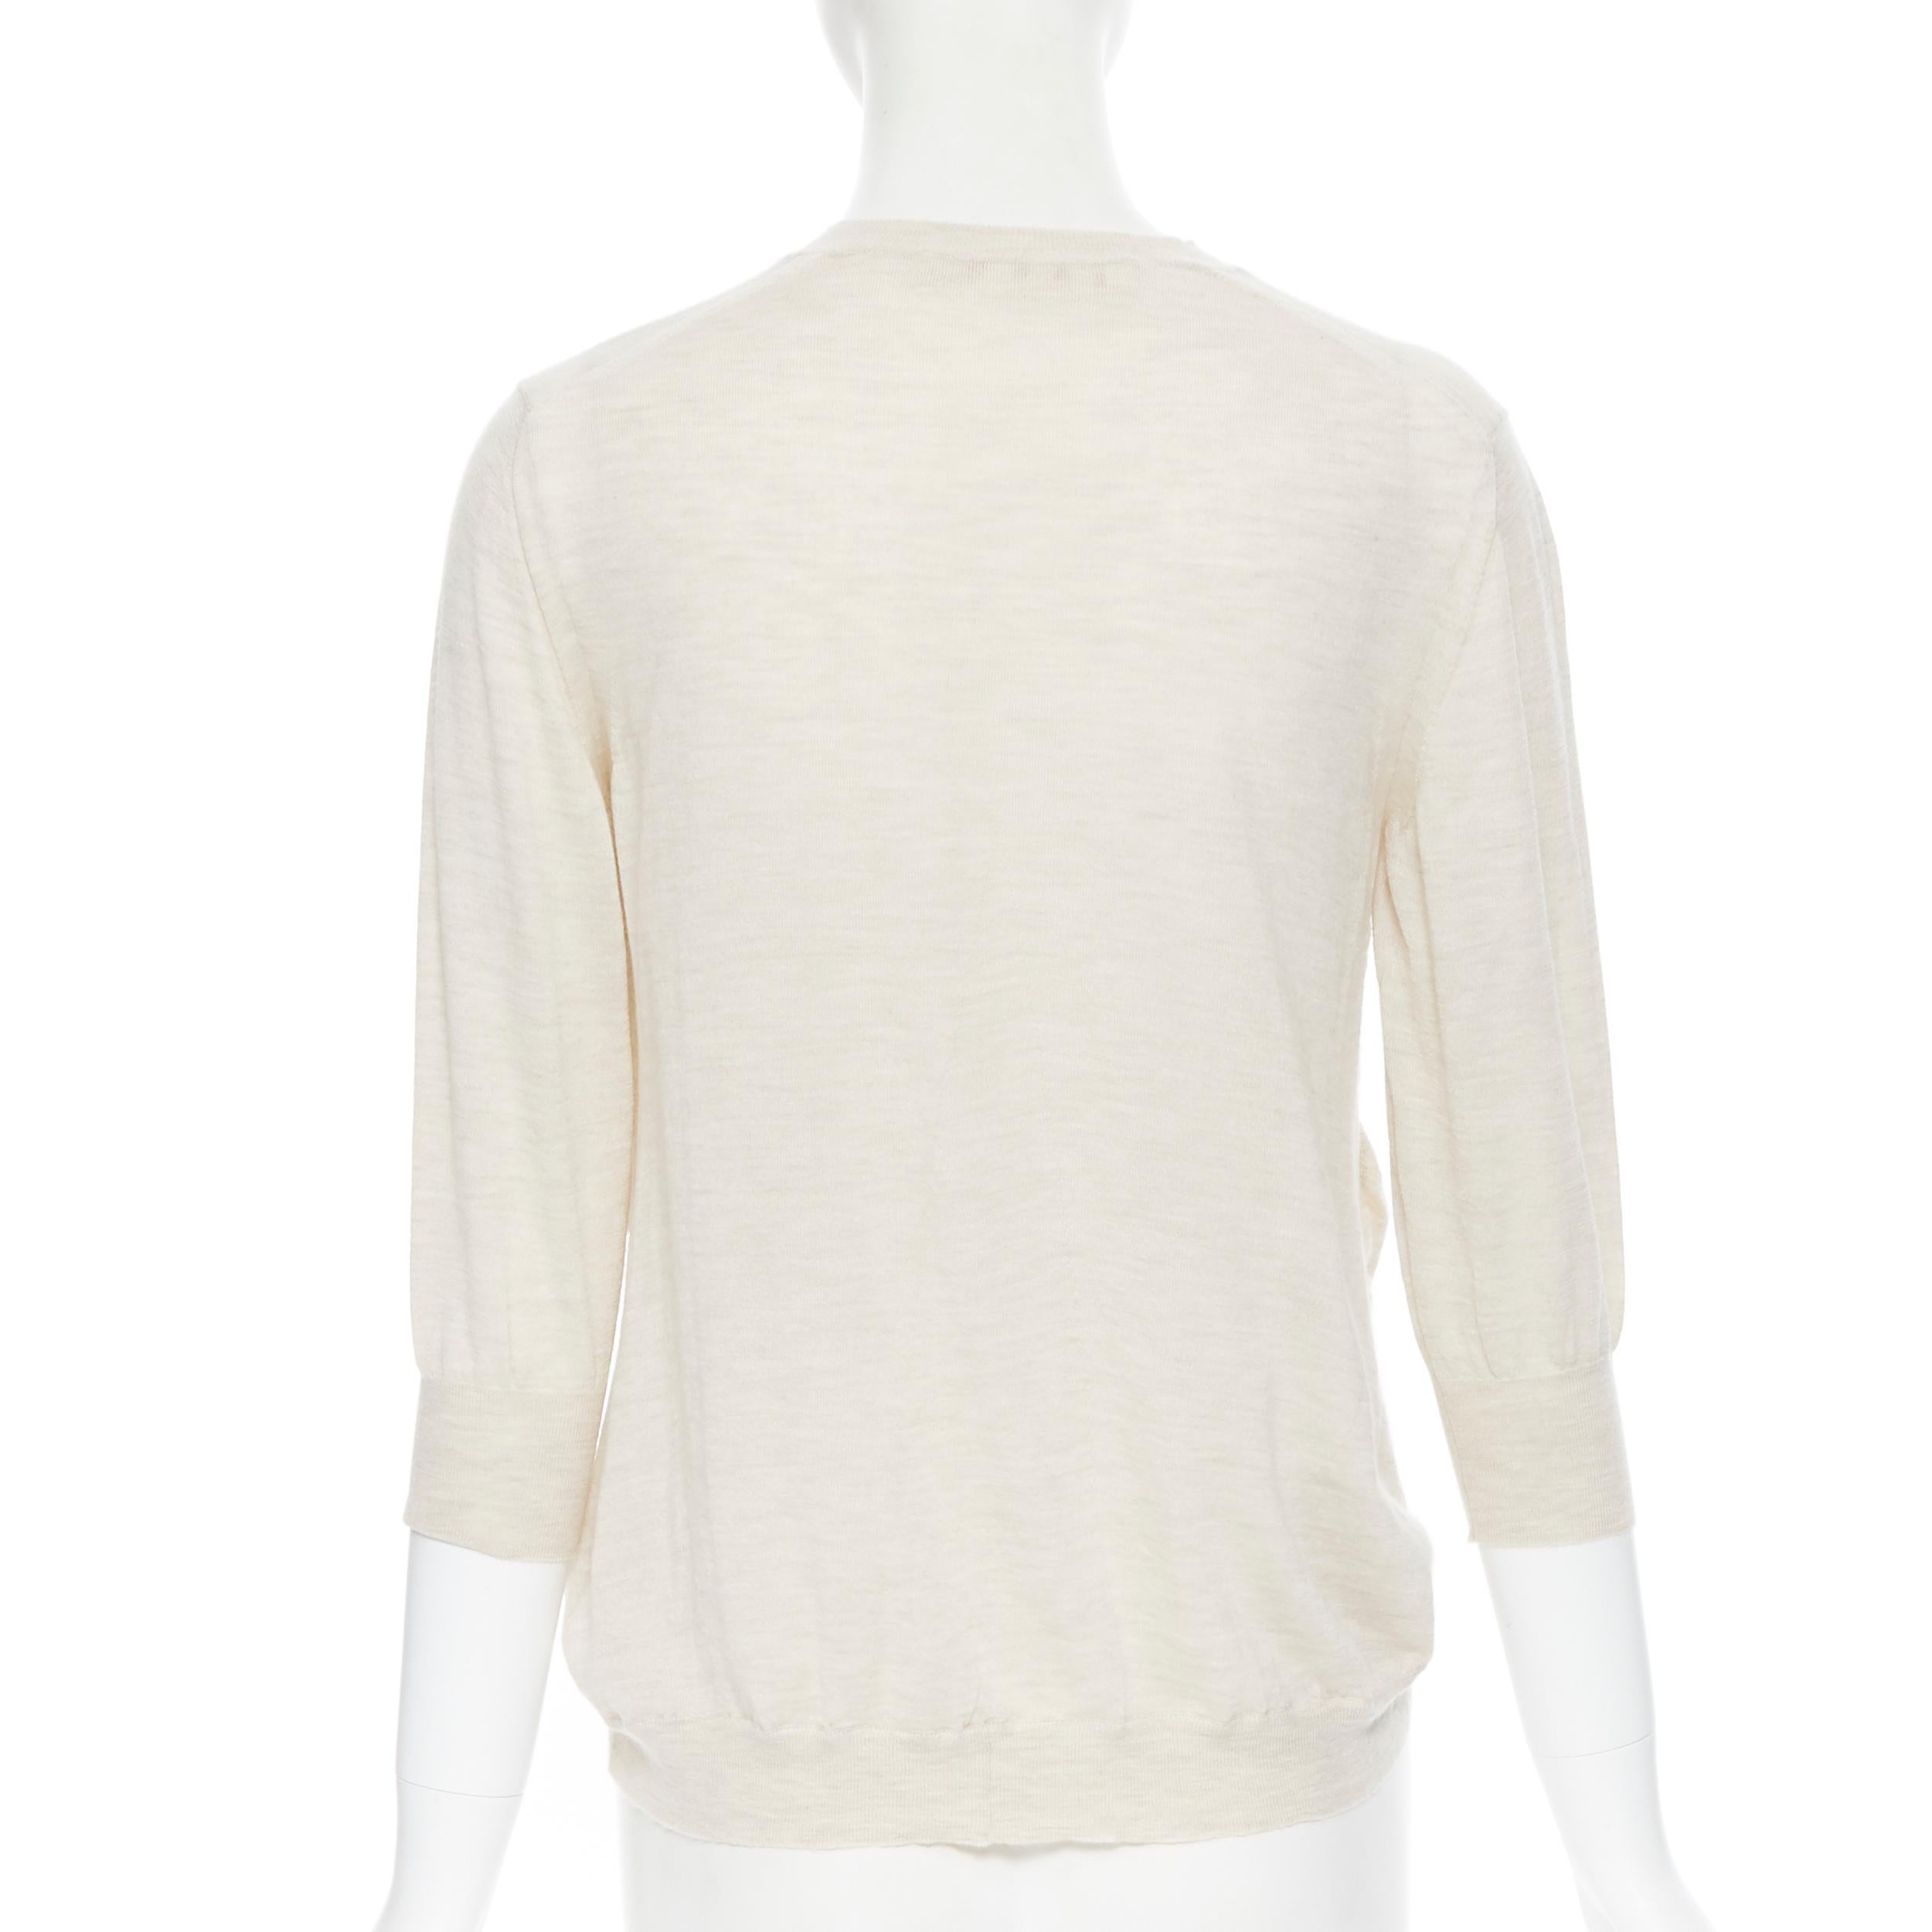 Beige MARNI cashmere blend beige dual front pocket 3/4 sleeve sweater top IT38 XS